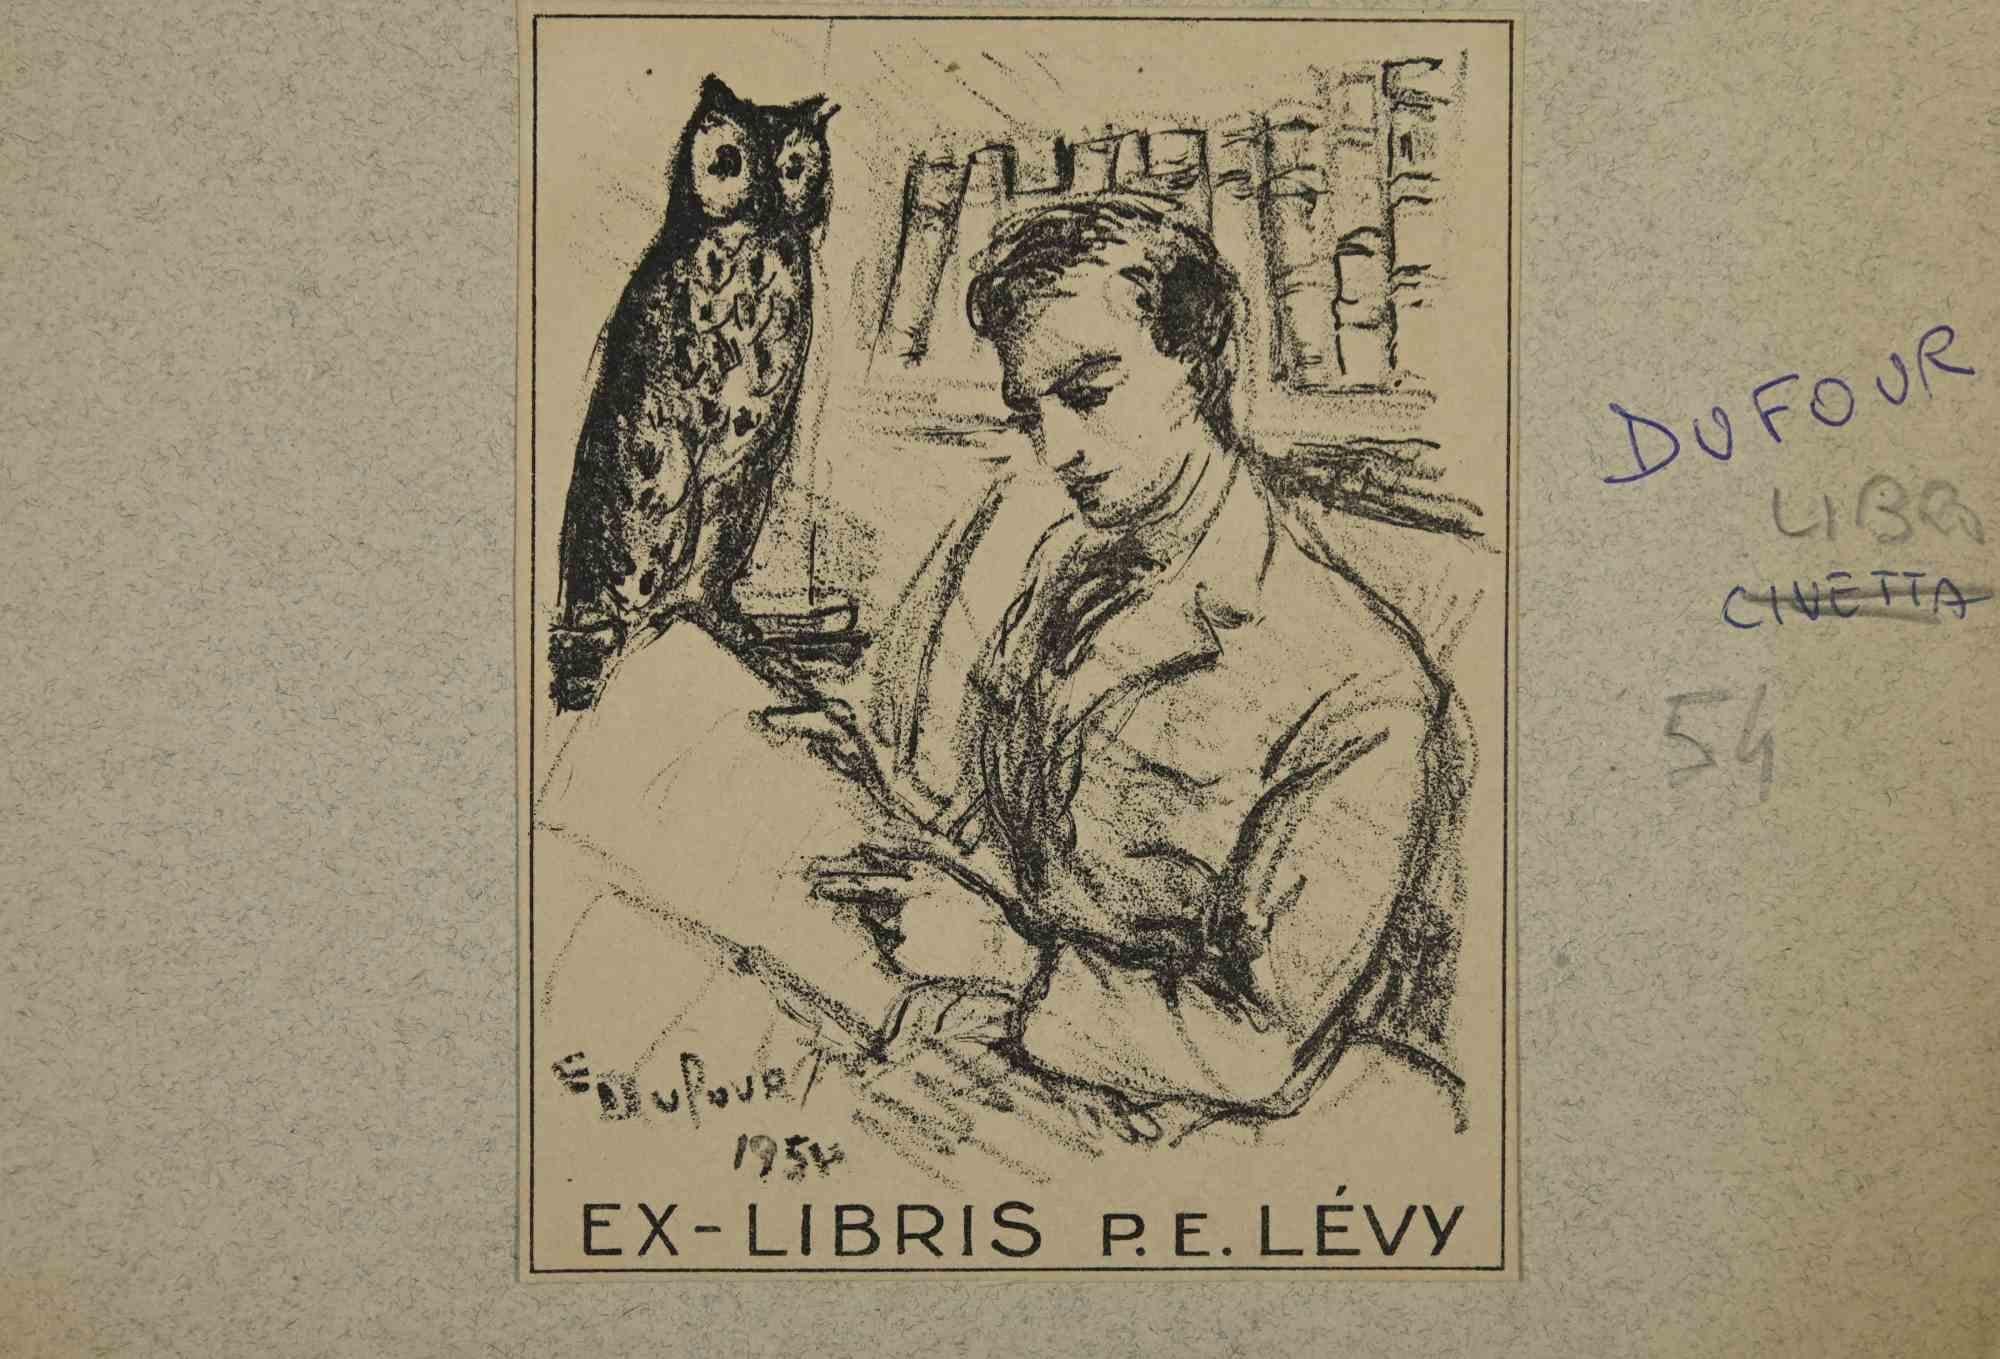 Unknown Figurative Print - Ex-Libris - P. E. Levy - woodcut - Mid 20th Century